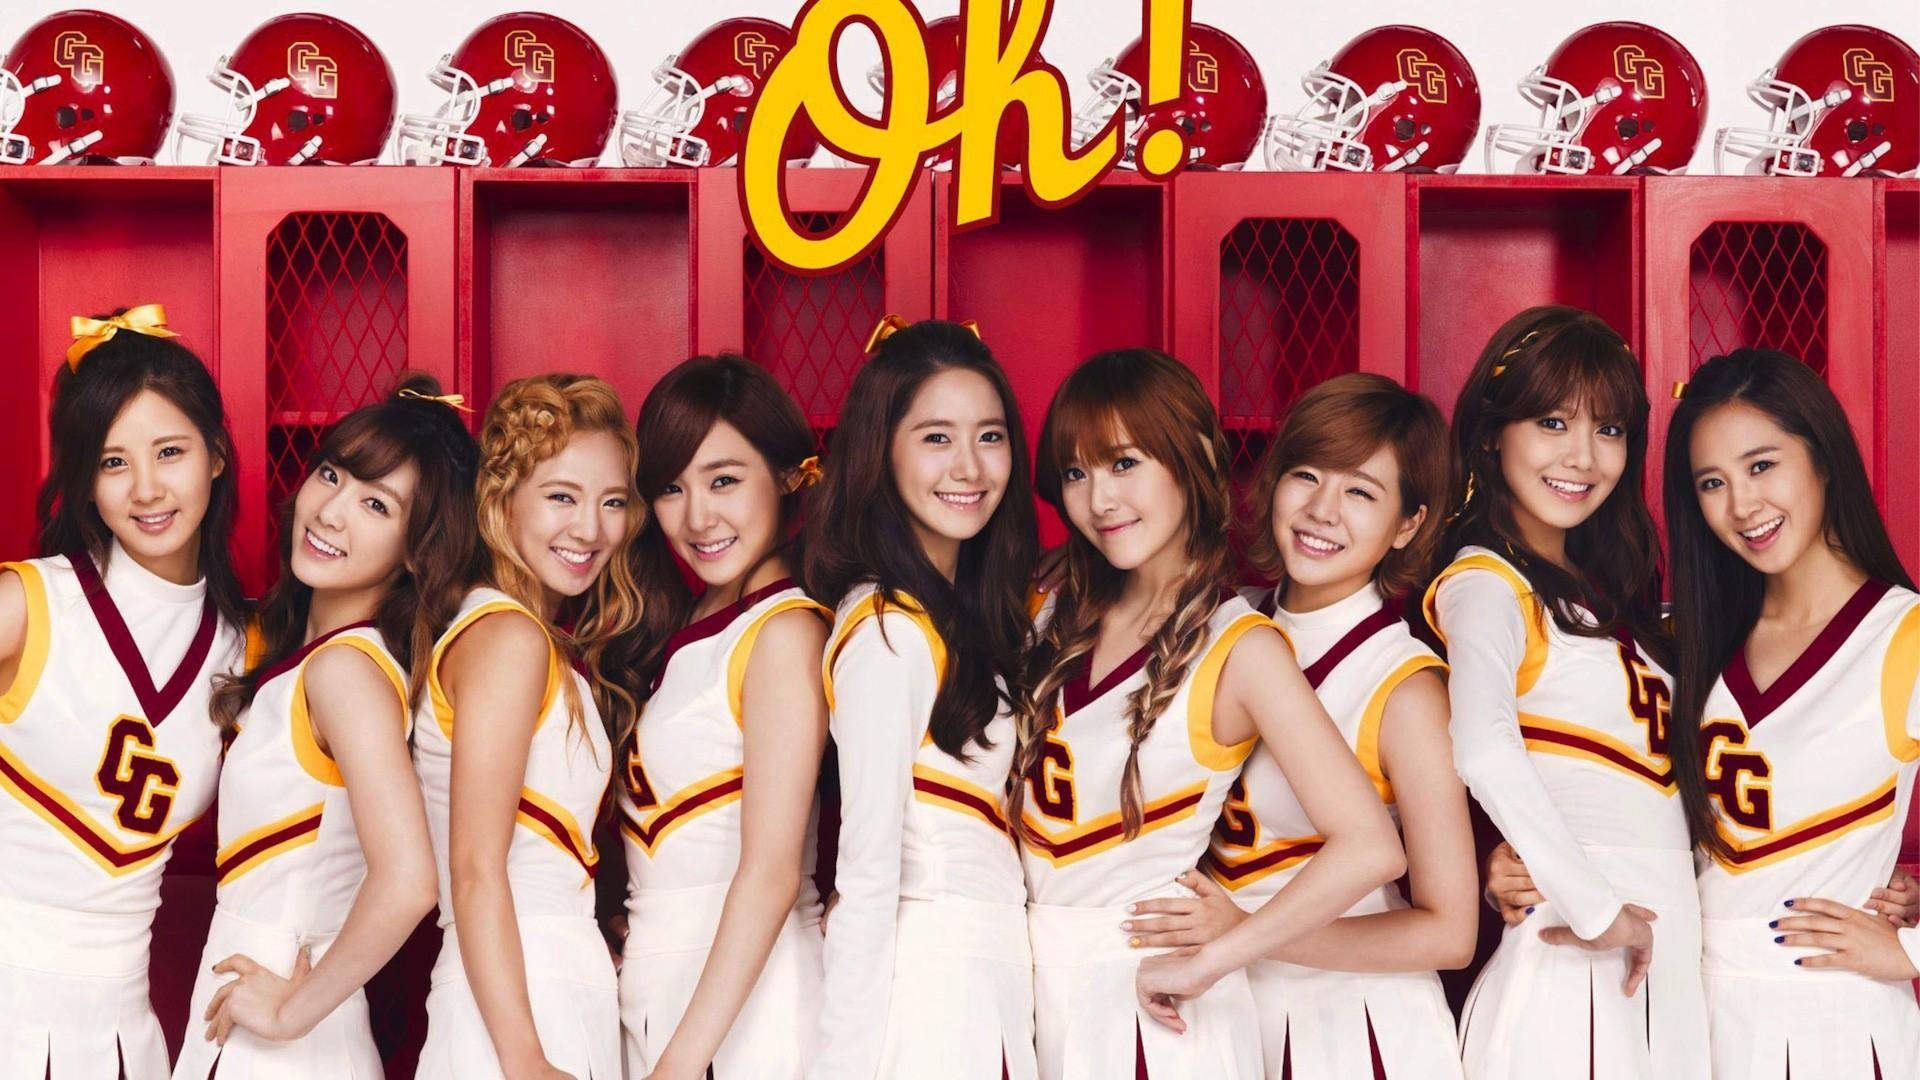 Download Girls' Generation Party Wallpaper | Wallpapers.com